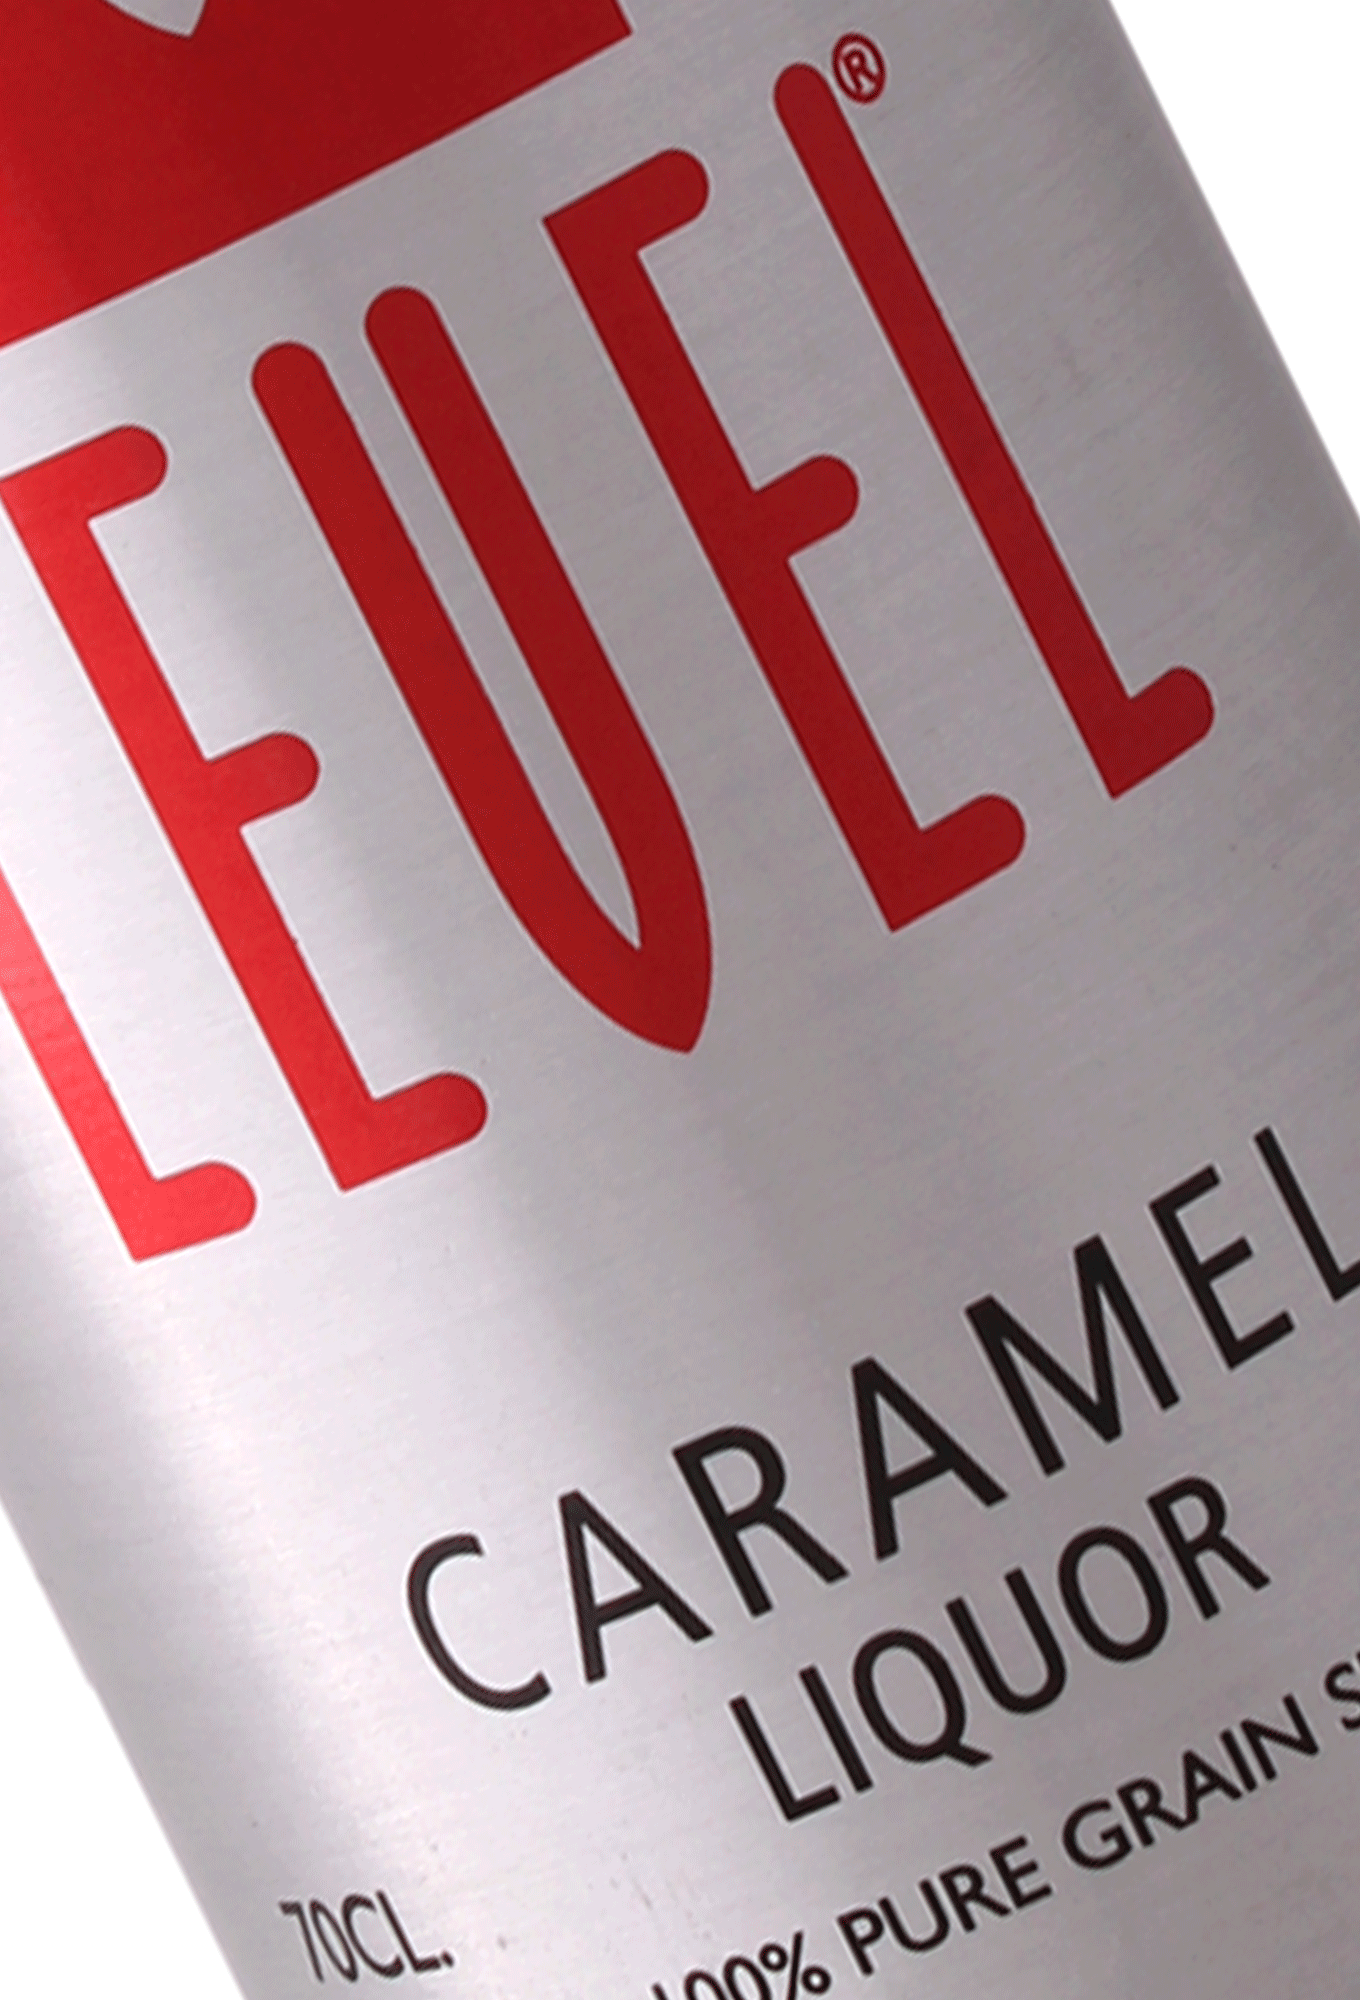 Level Caramel Vodka